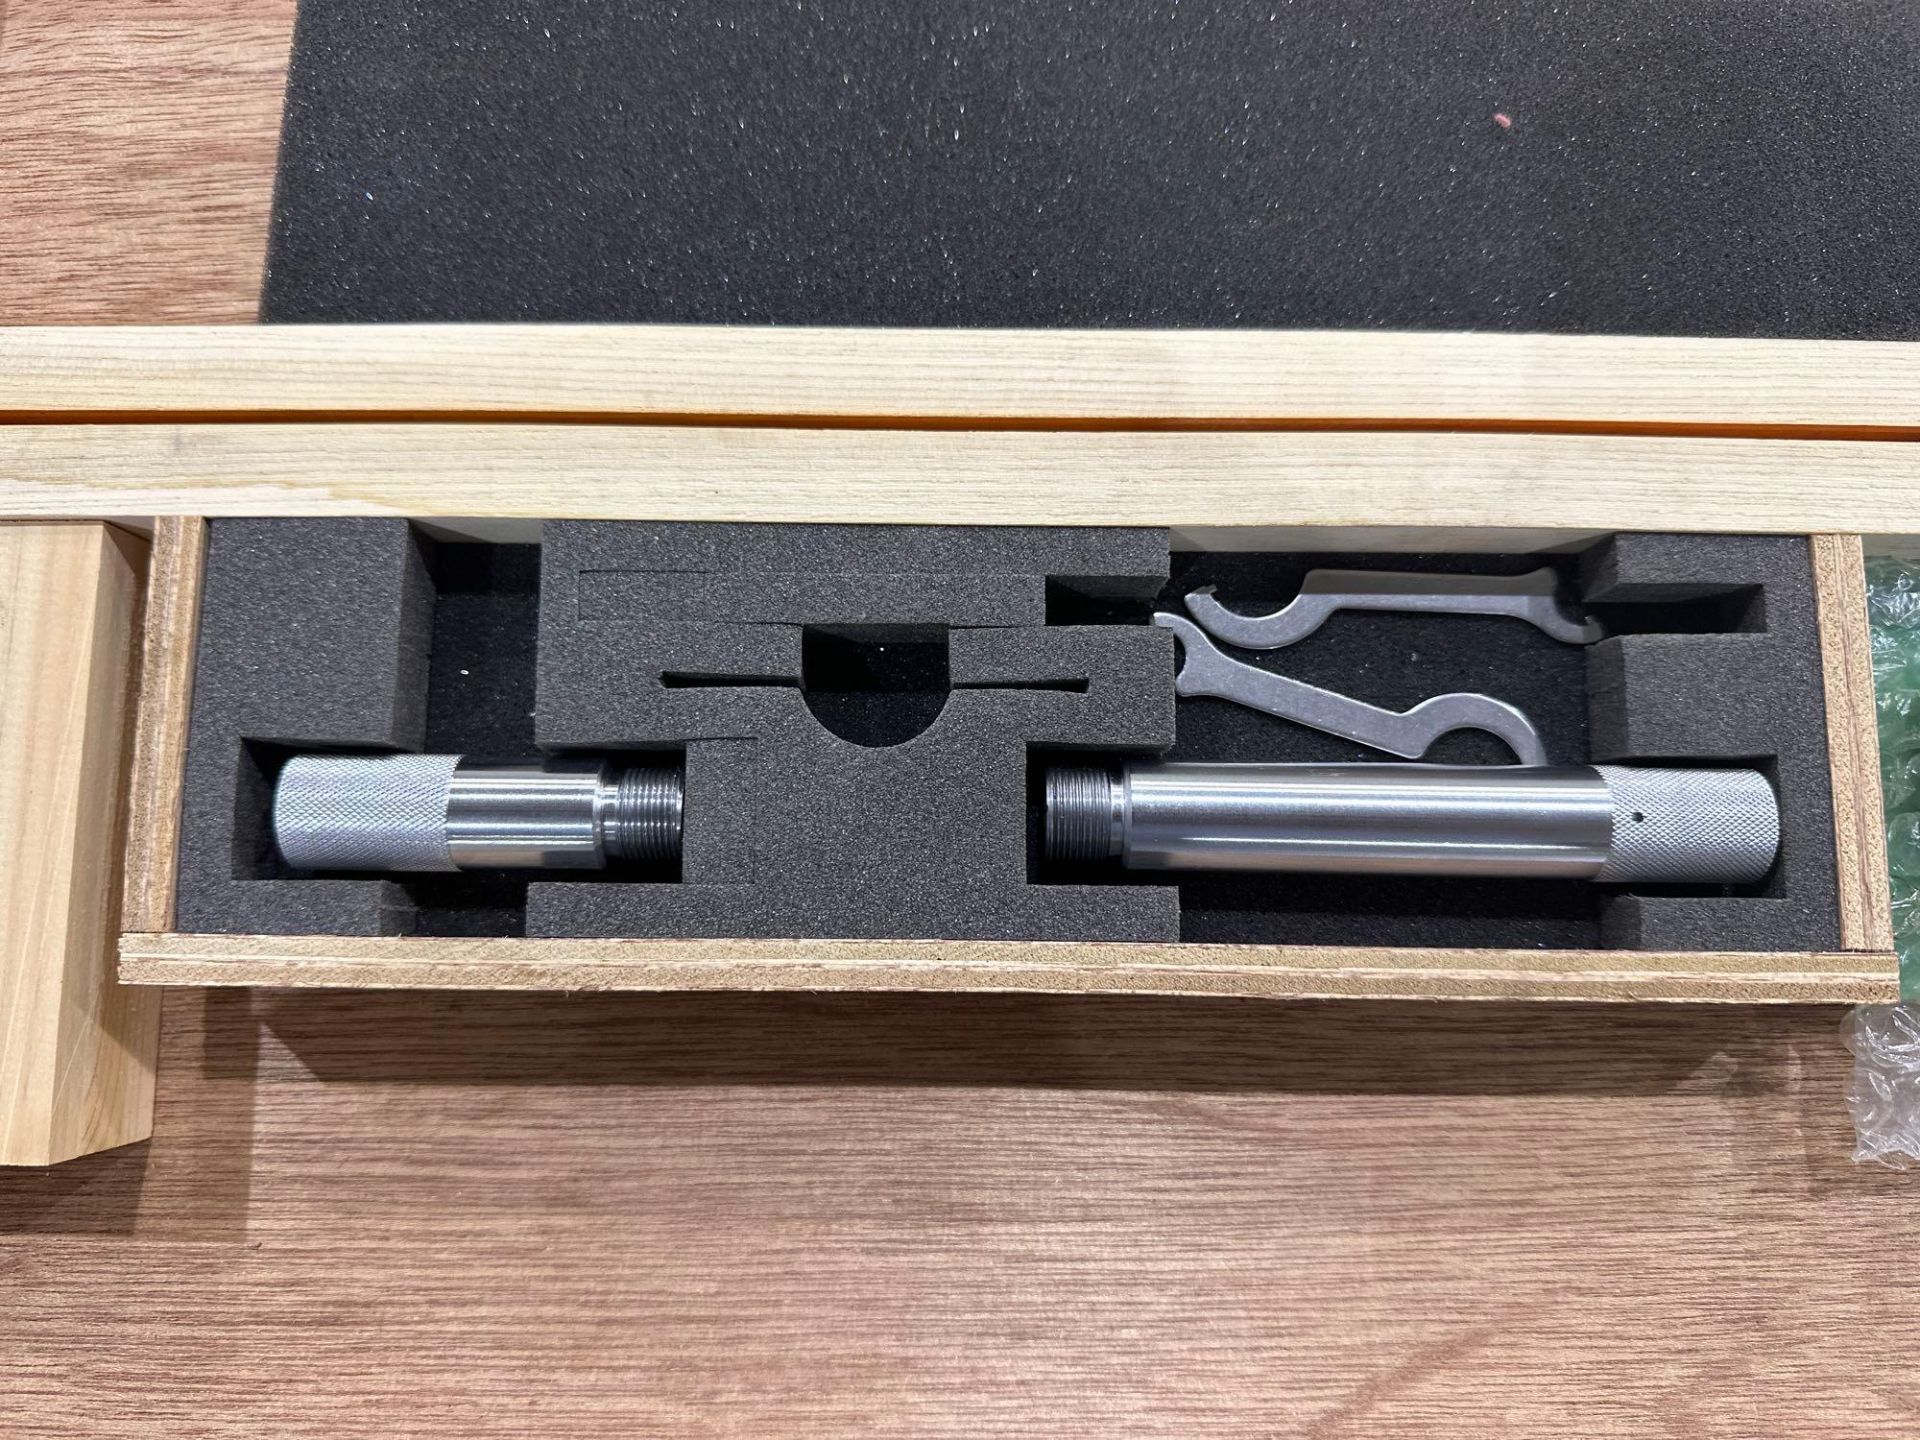 Mitutoyo Bore Gauge with Micrometer Head, 16–24”, Code No. 511-837 Series, in wood case - Image 5 of 7